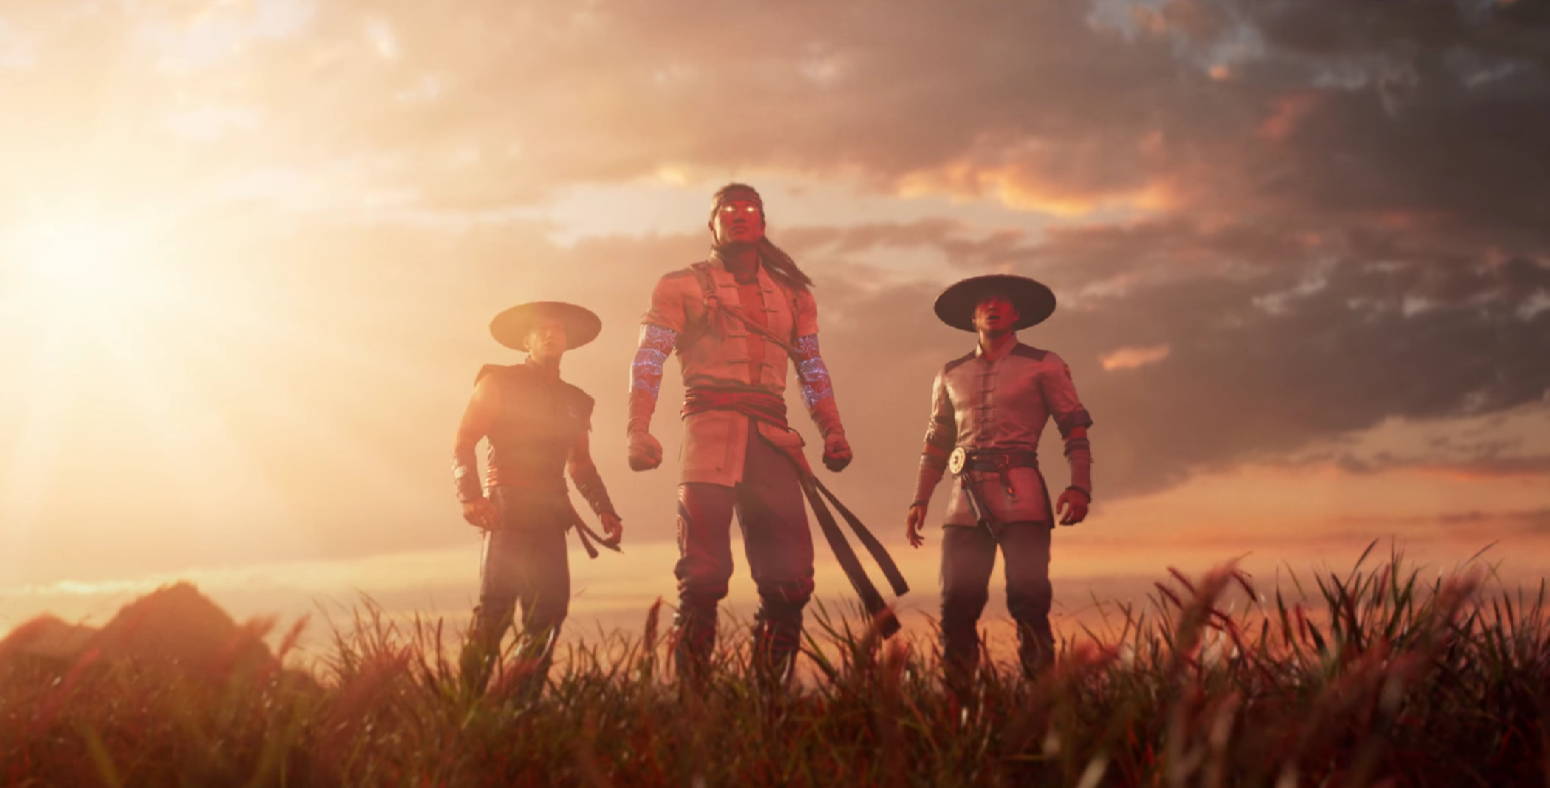 Mortal Kombat 1 - Official Announcement Trailer Dropping Soon! 